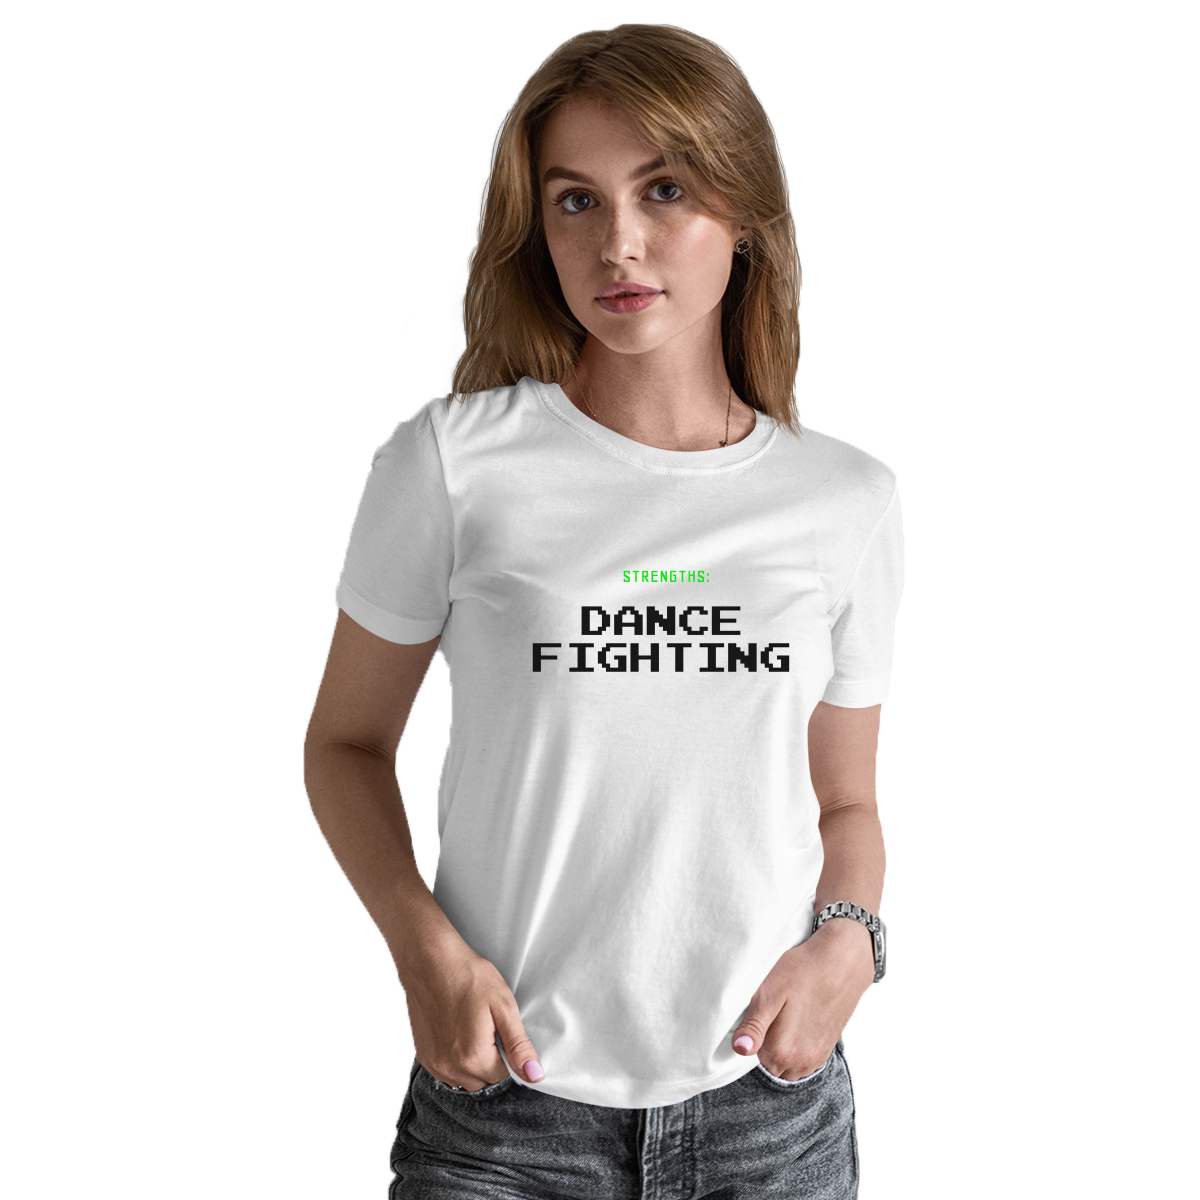 Strengths Dance Fighting  Women's T-shirt | White